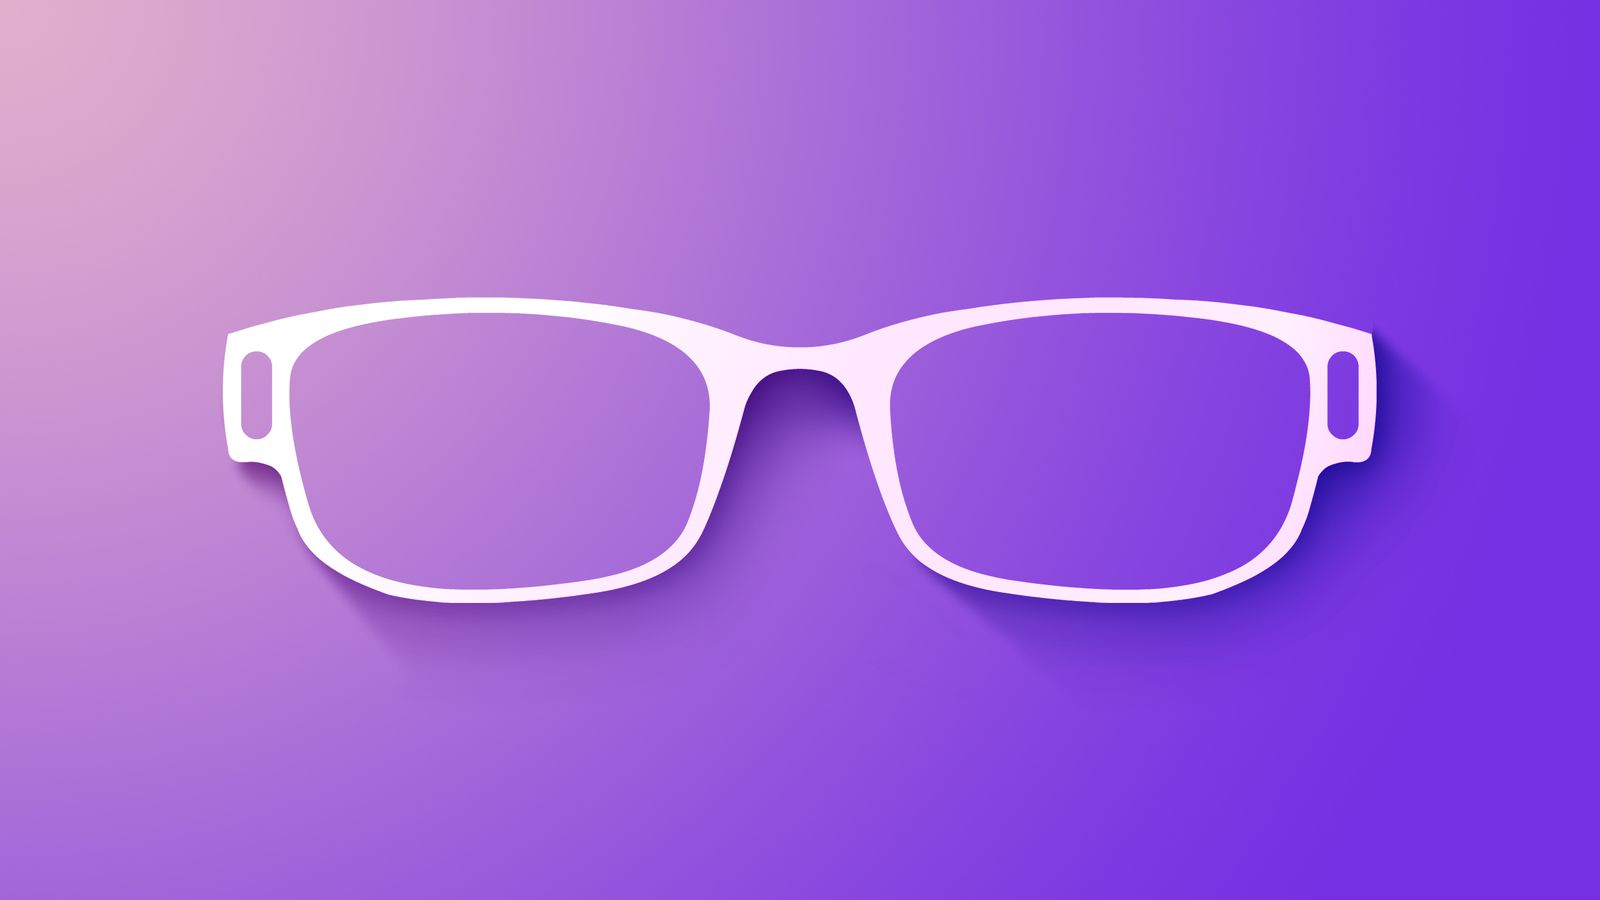 https://images.macrumors.com/t/5K5PpN2W2EXgWWaTwD_N1-PgatA=/1600x0/article-new/2021/01/Apple-Glasses-Purple-Feature.jpg